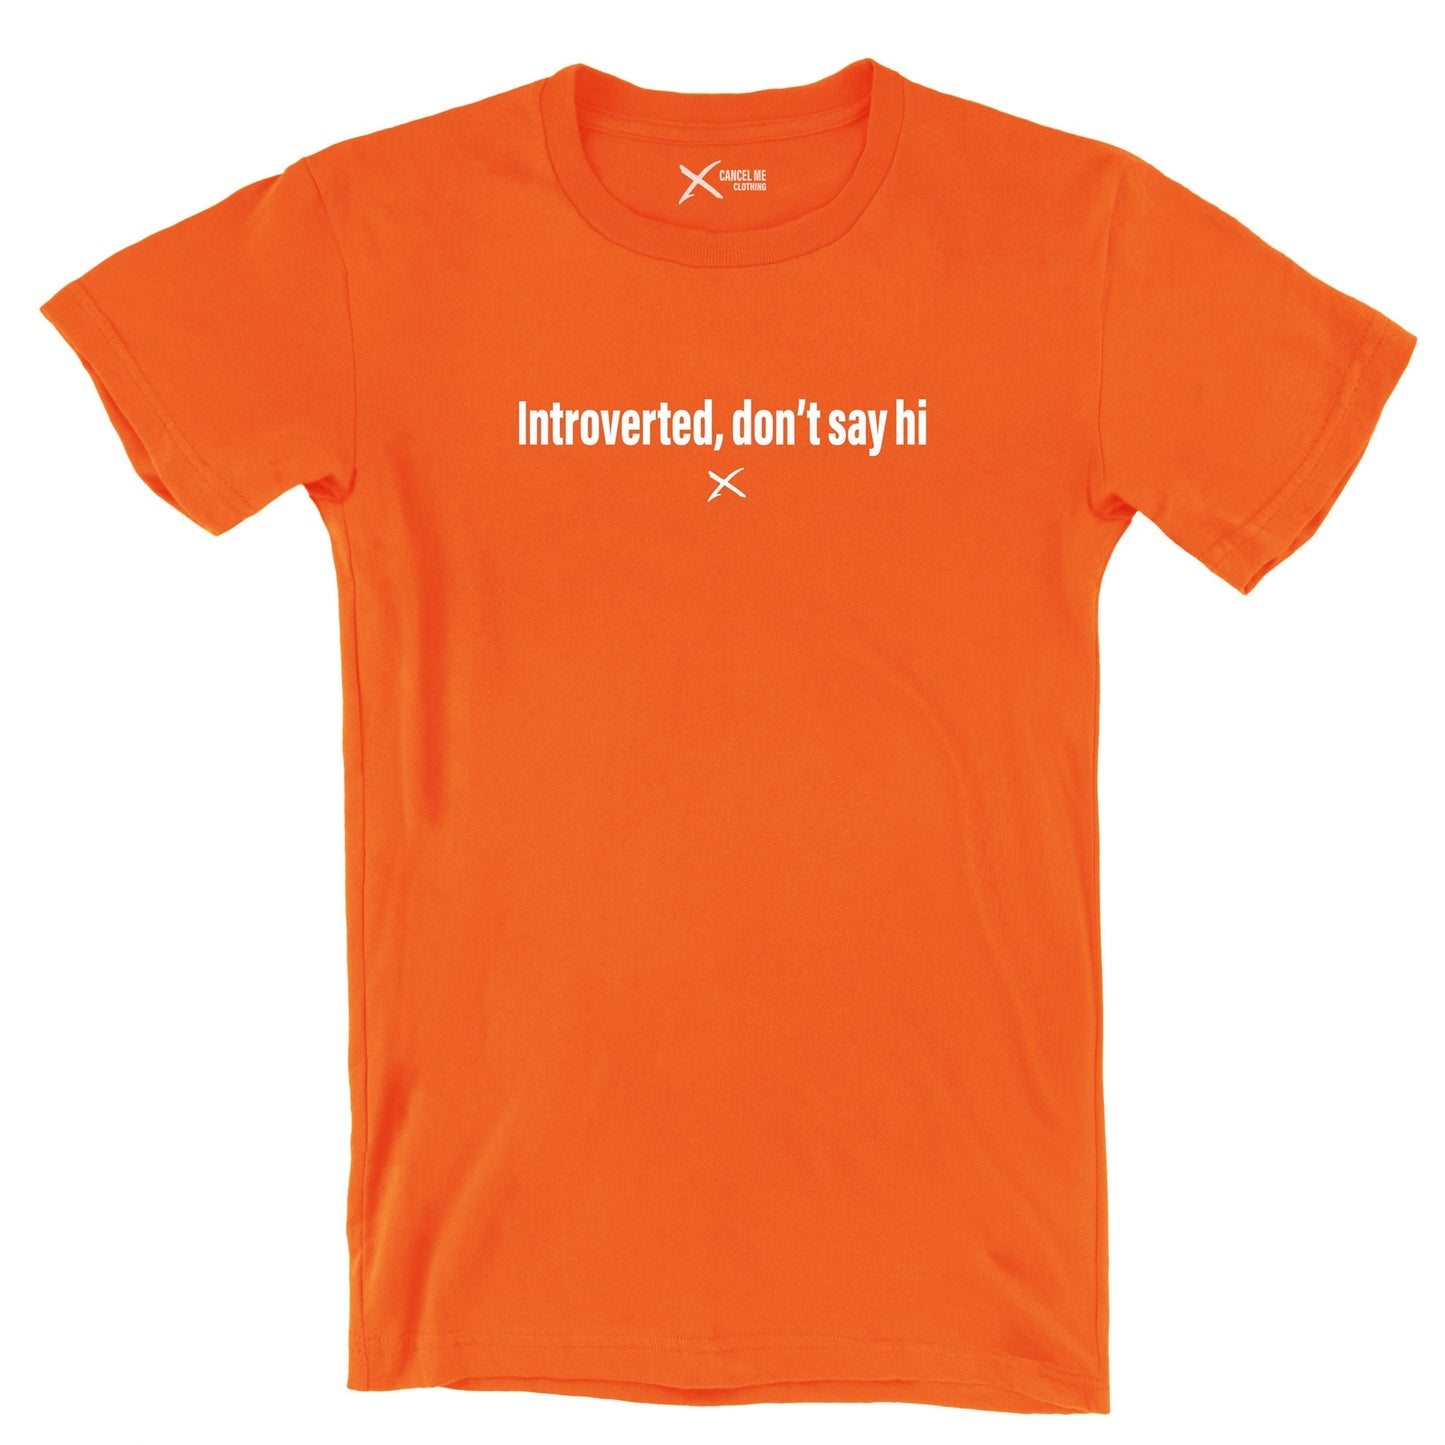 Introverted, don't say hi - Shirt